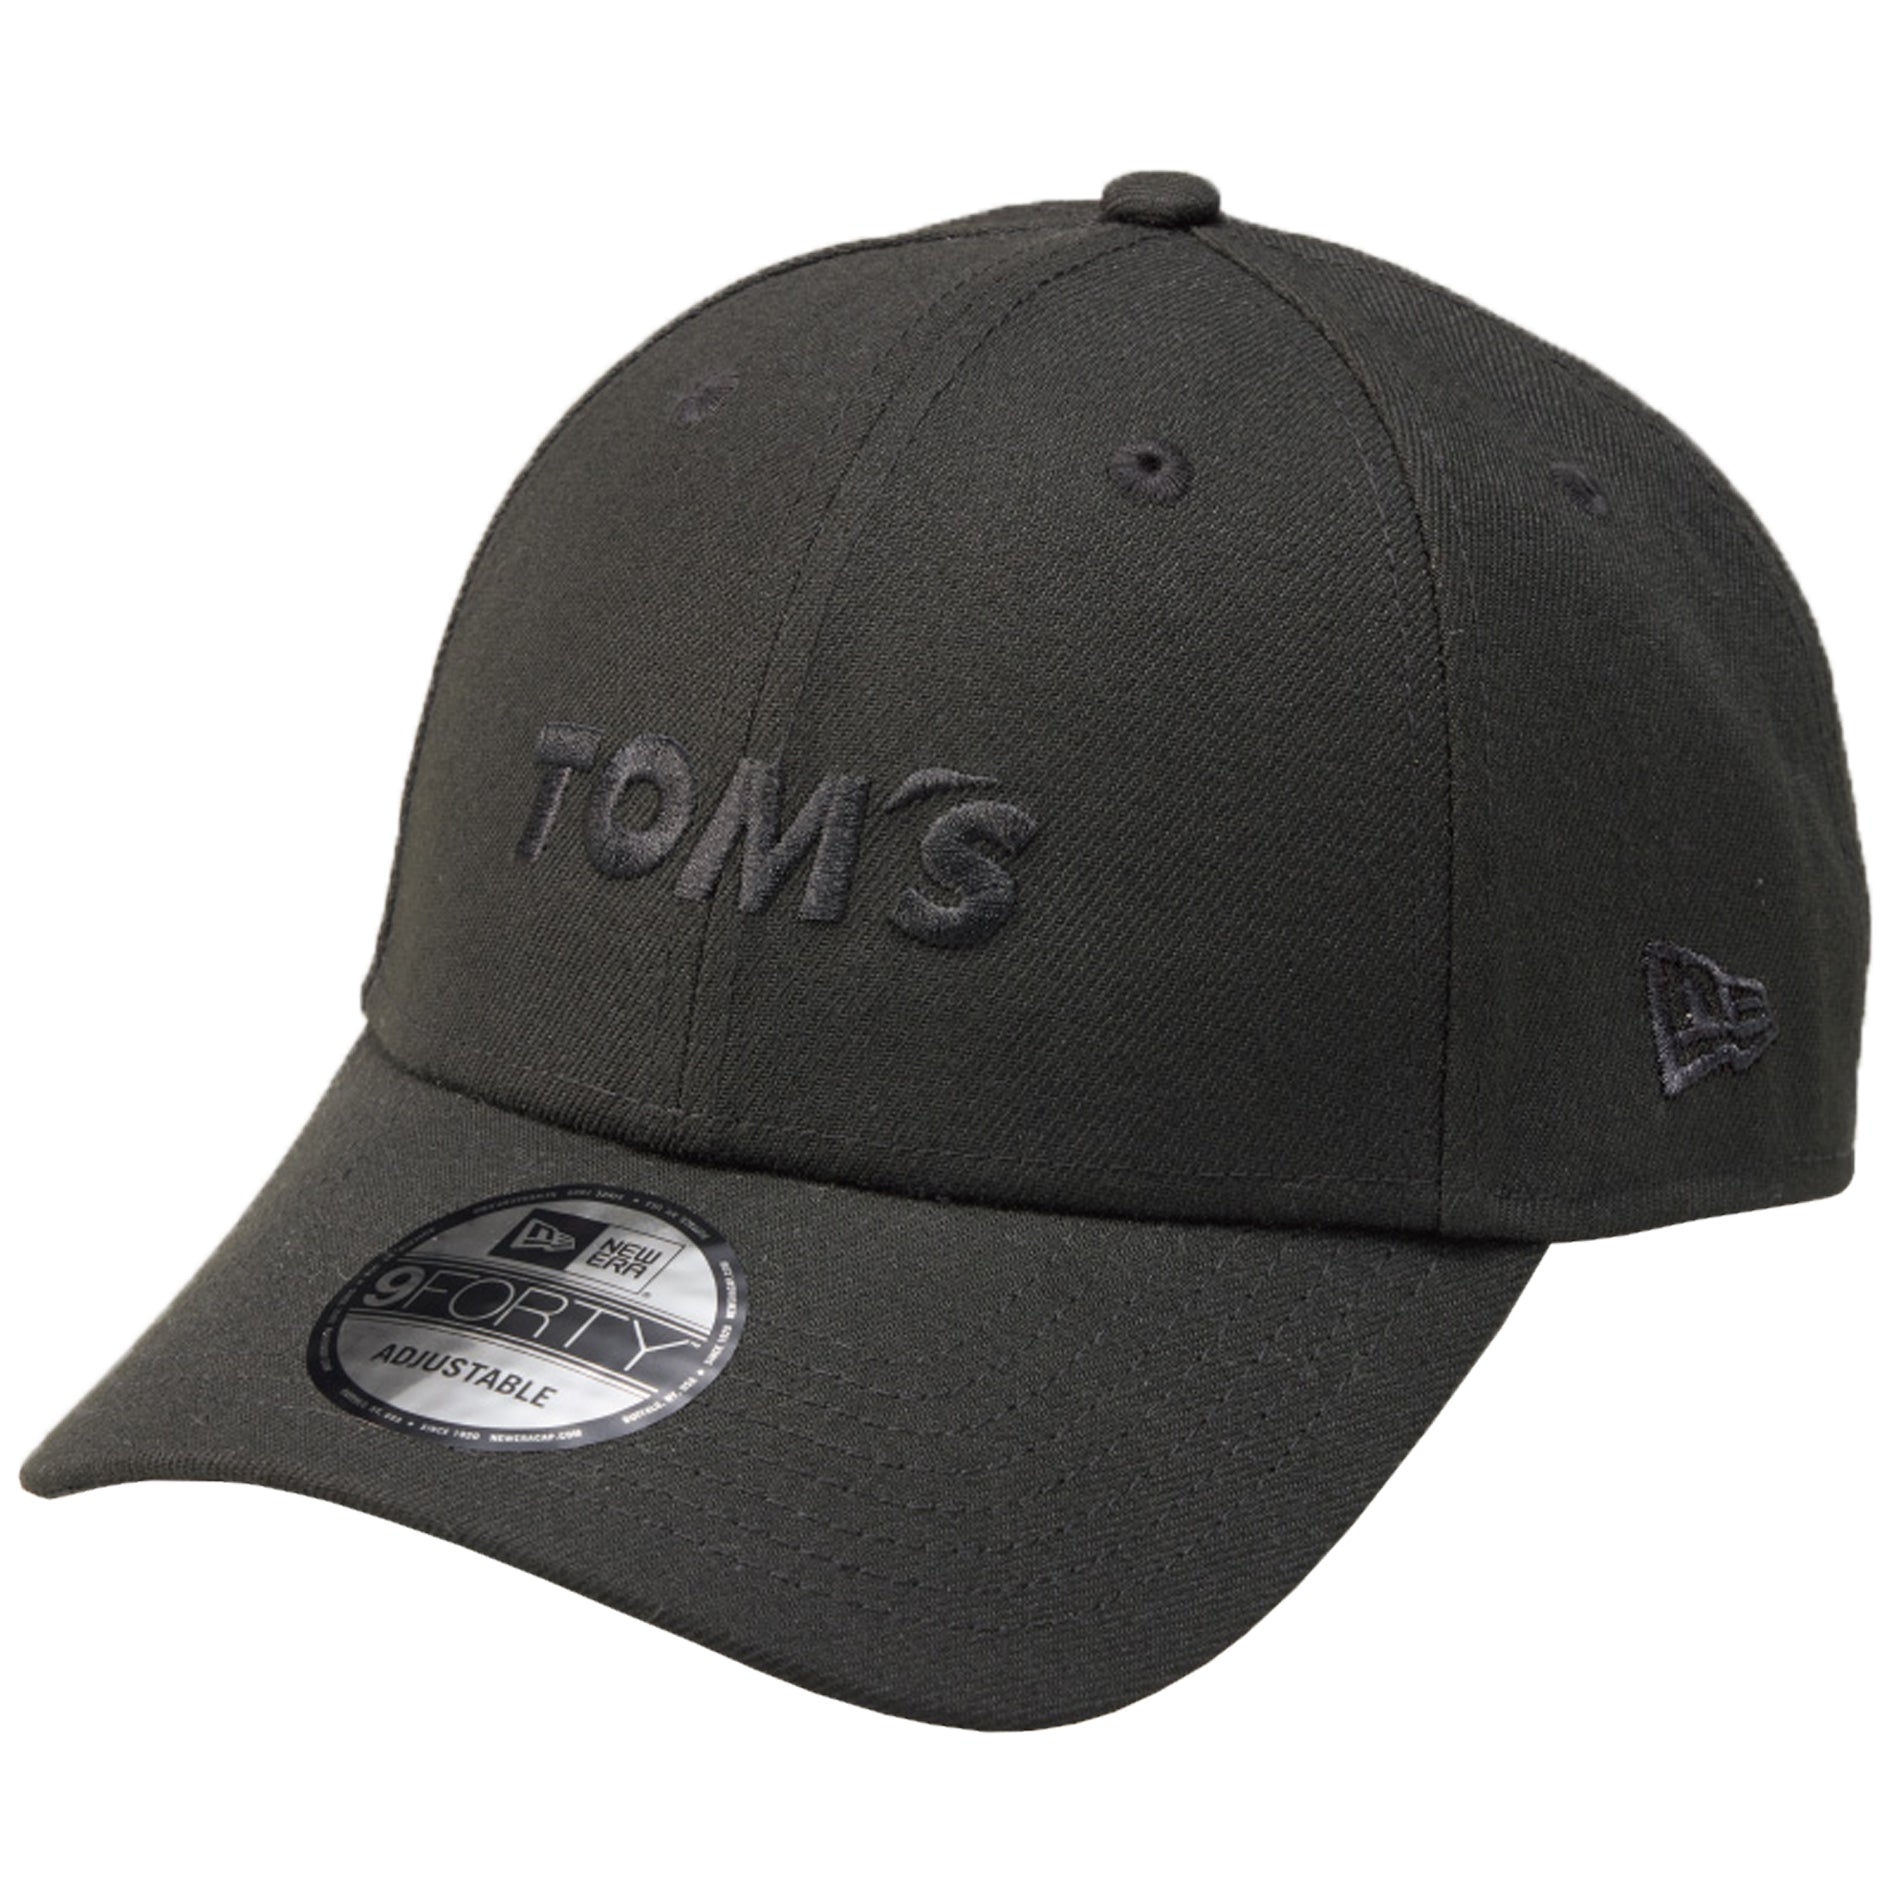 TOM'S Racing - TOM'S Logo New Era Hat (940) Adjustable